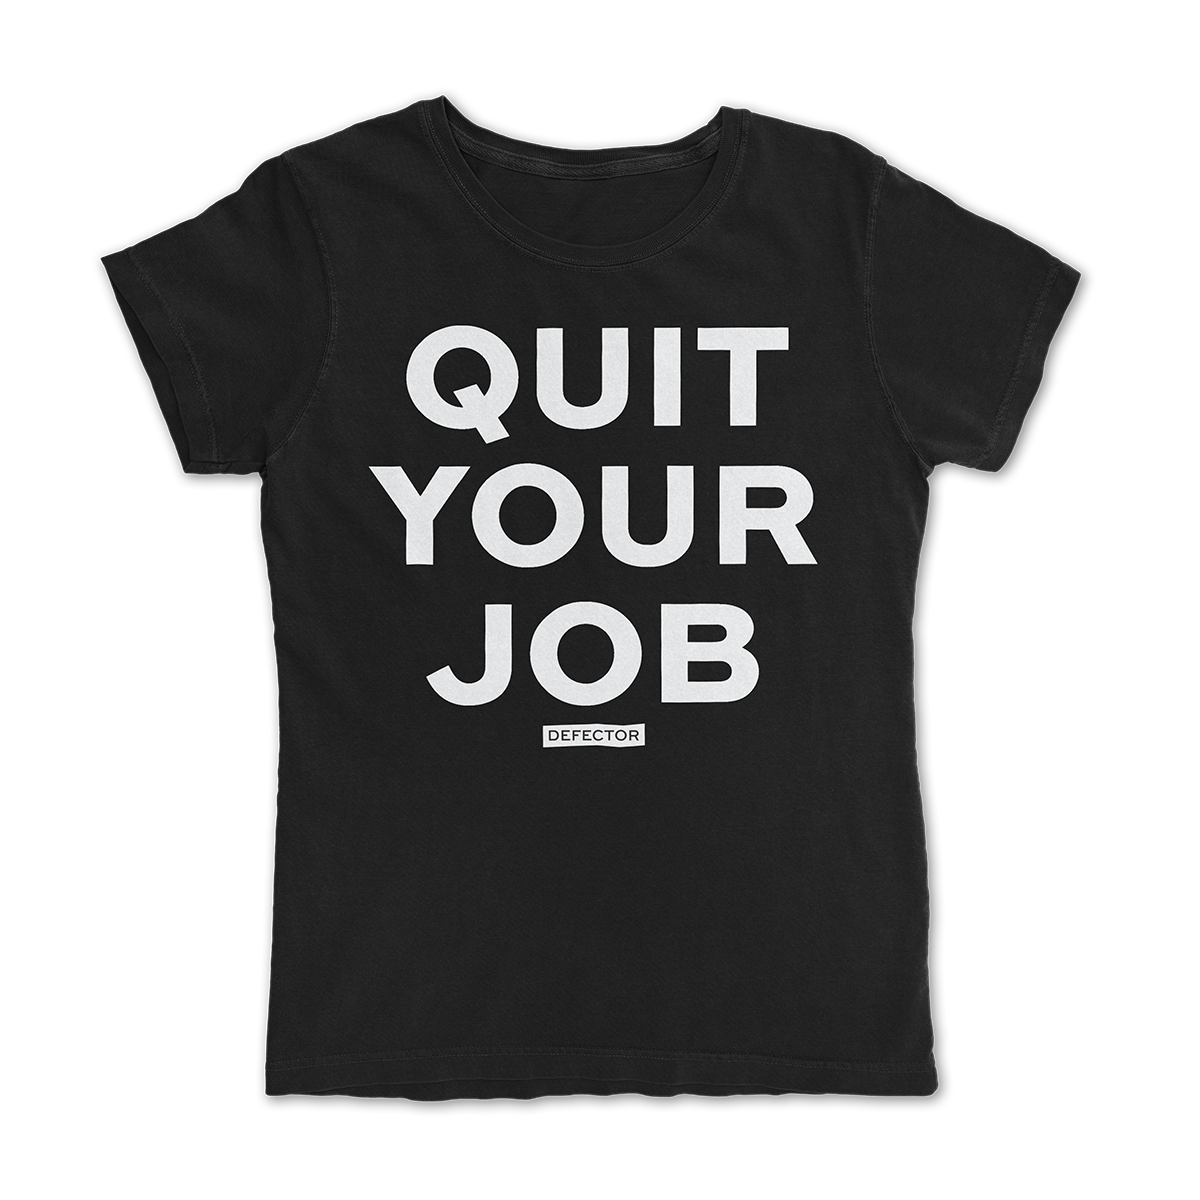 Black shirt, white text: QUIT YOUR JOB.